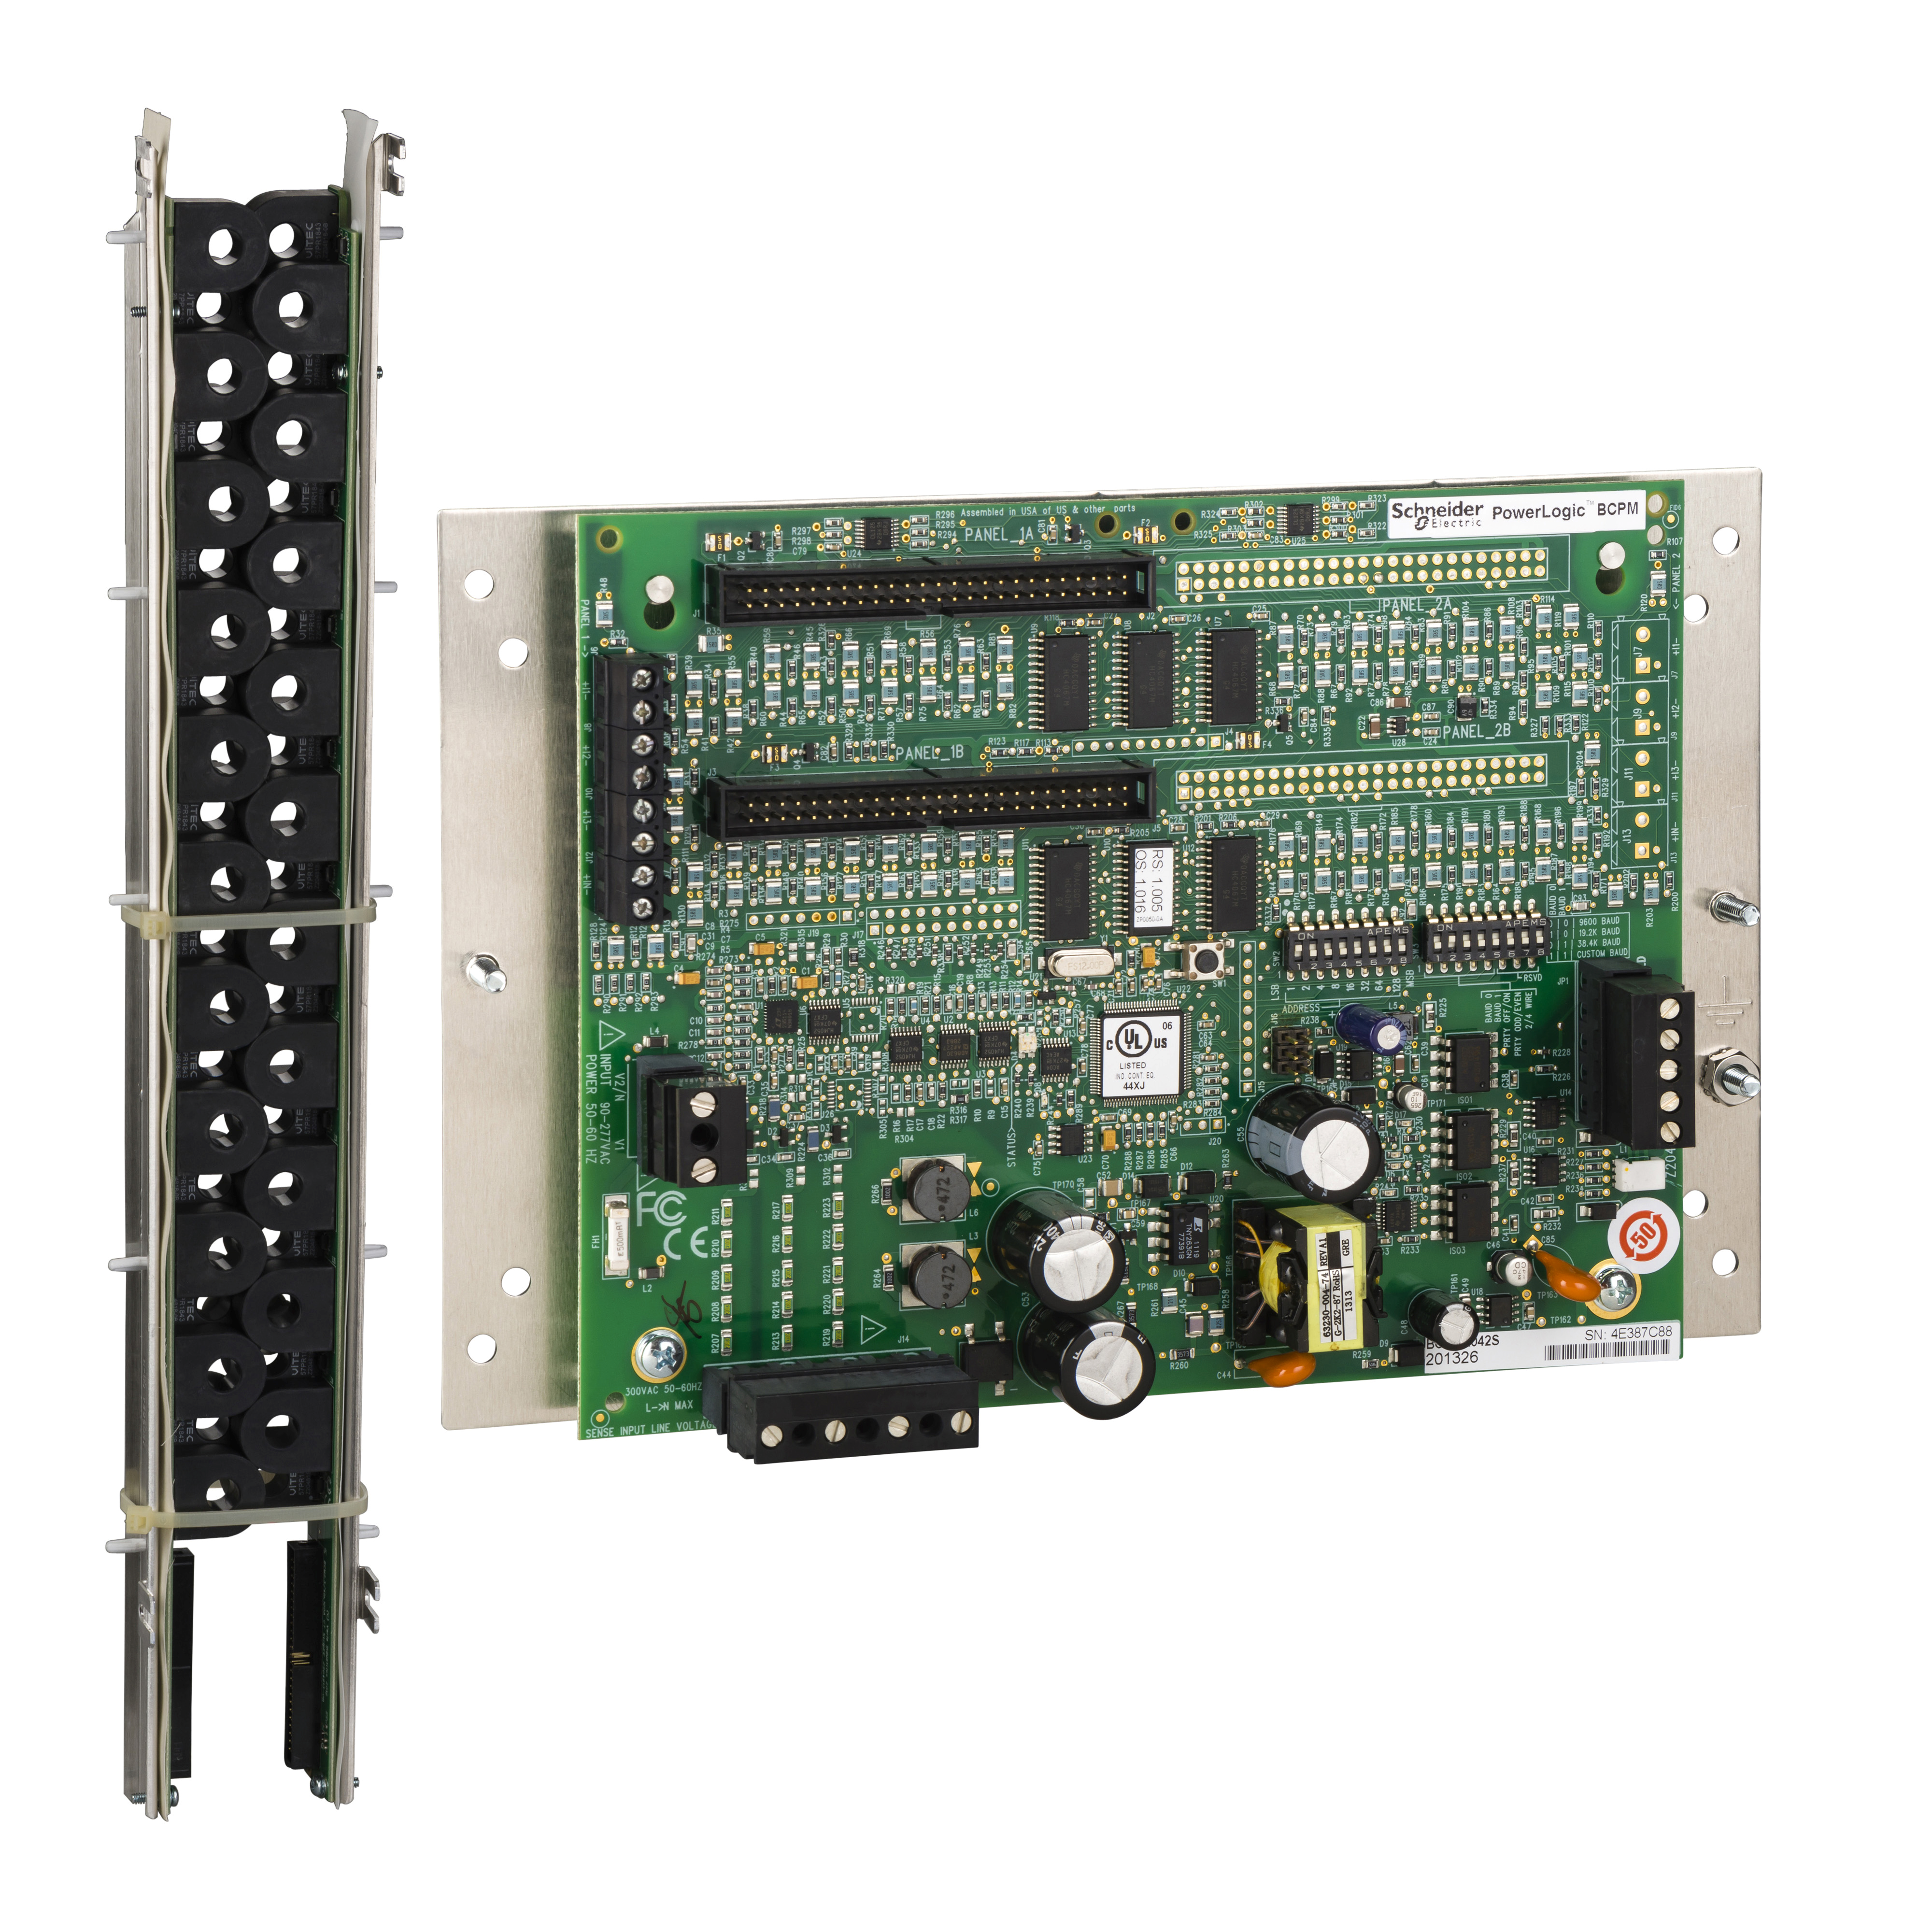 BCPM power monitoring advanced + ethernet - 30 split core CT 50 A